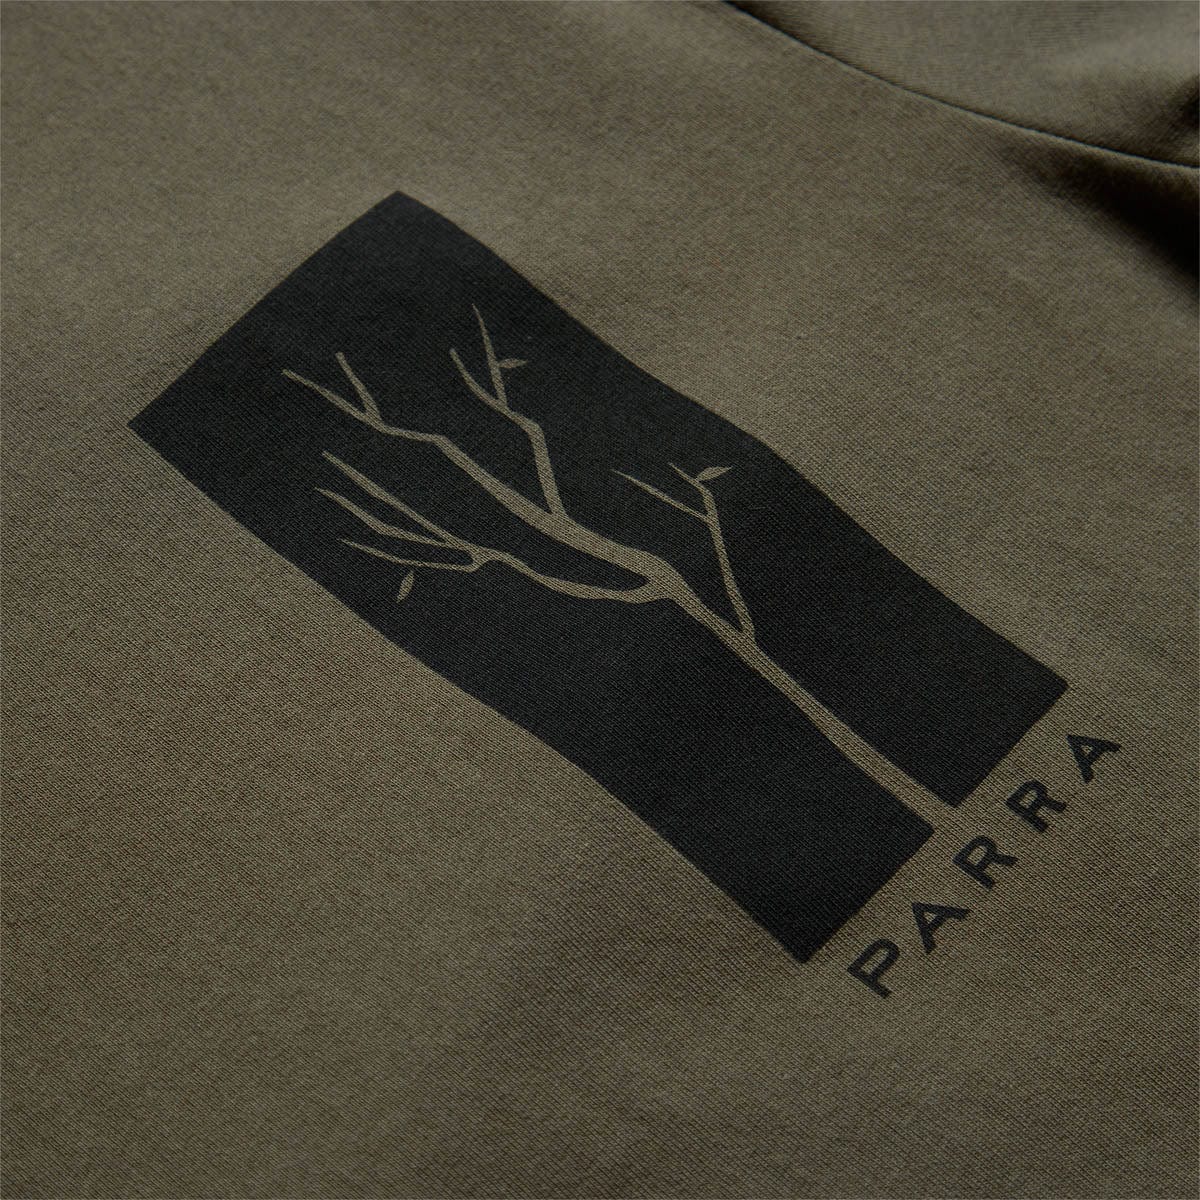 By Parra T-Shirts DEAD TREE T-SHIRT